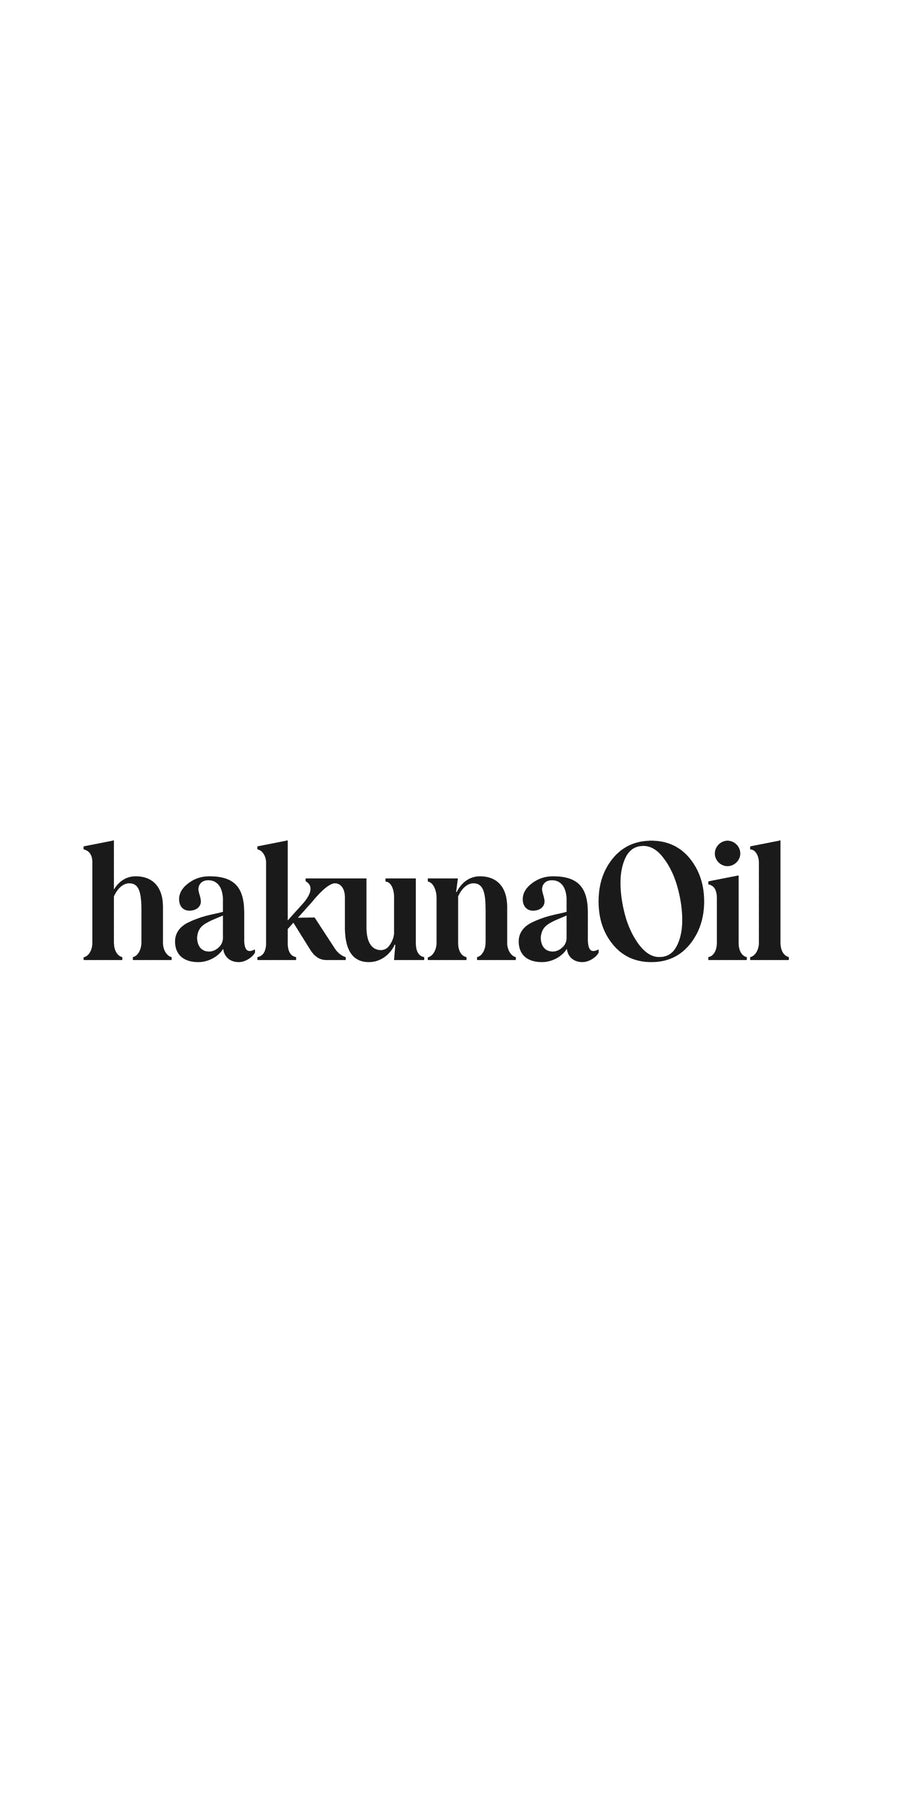 Hakuna Oil